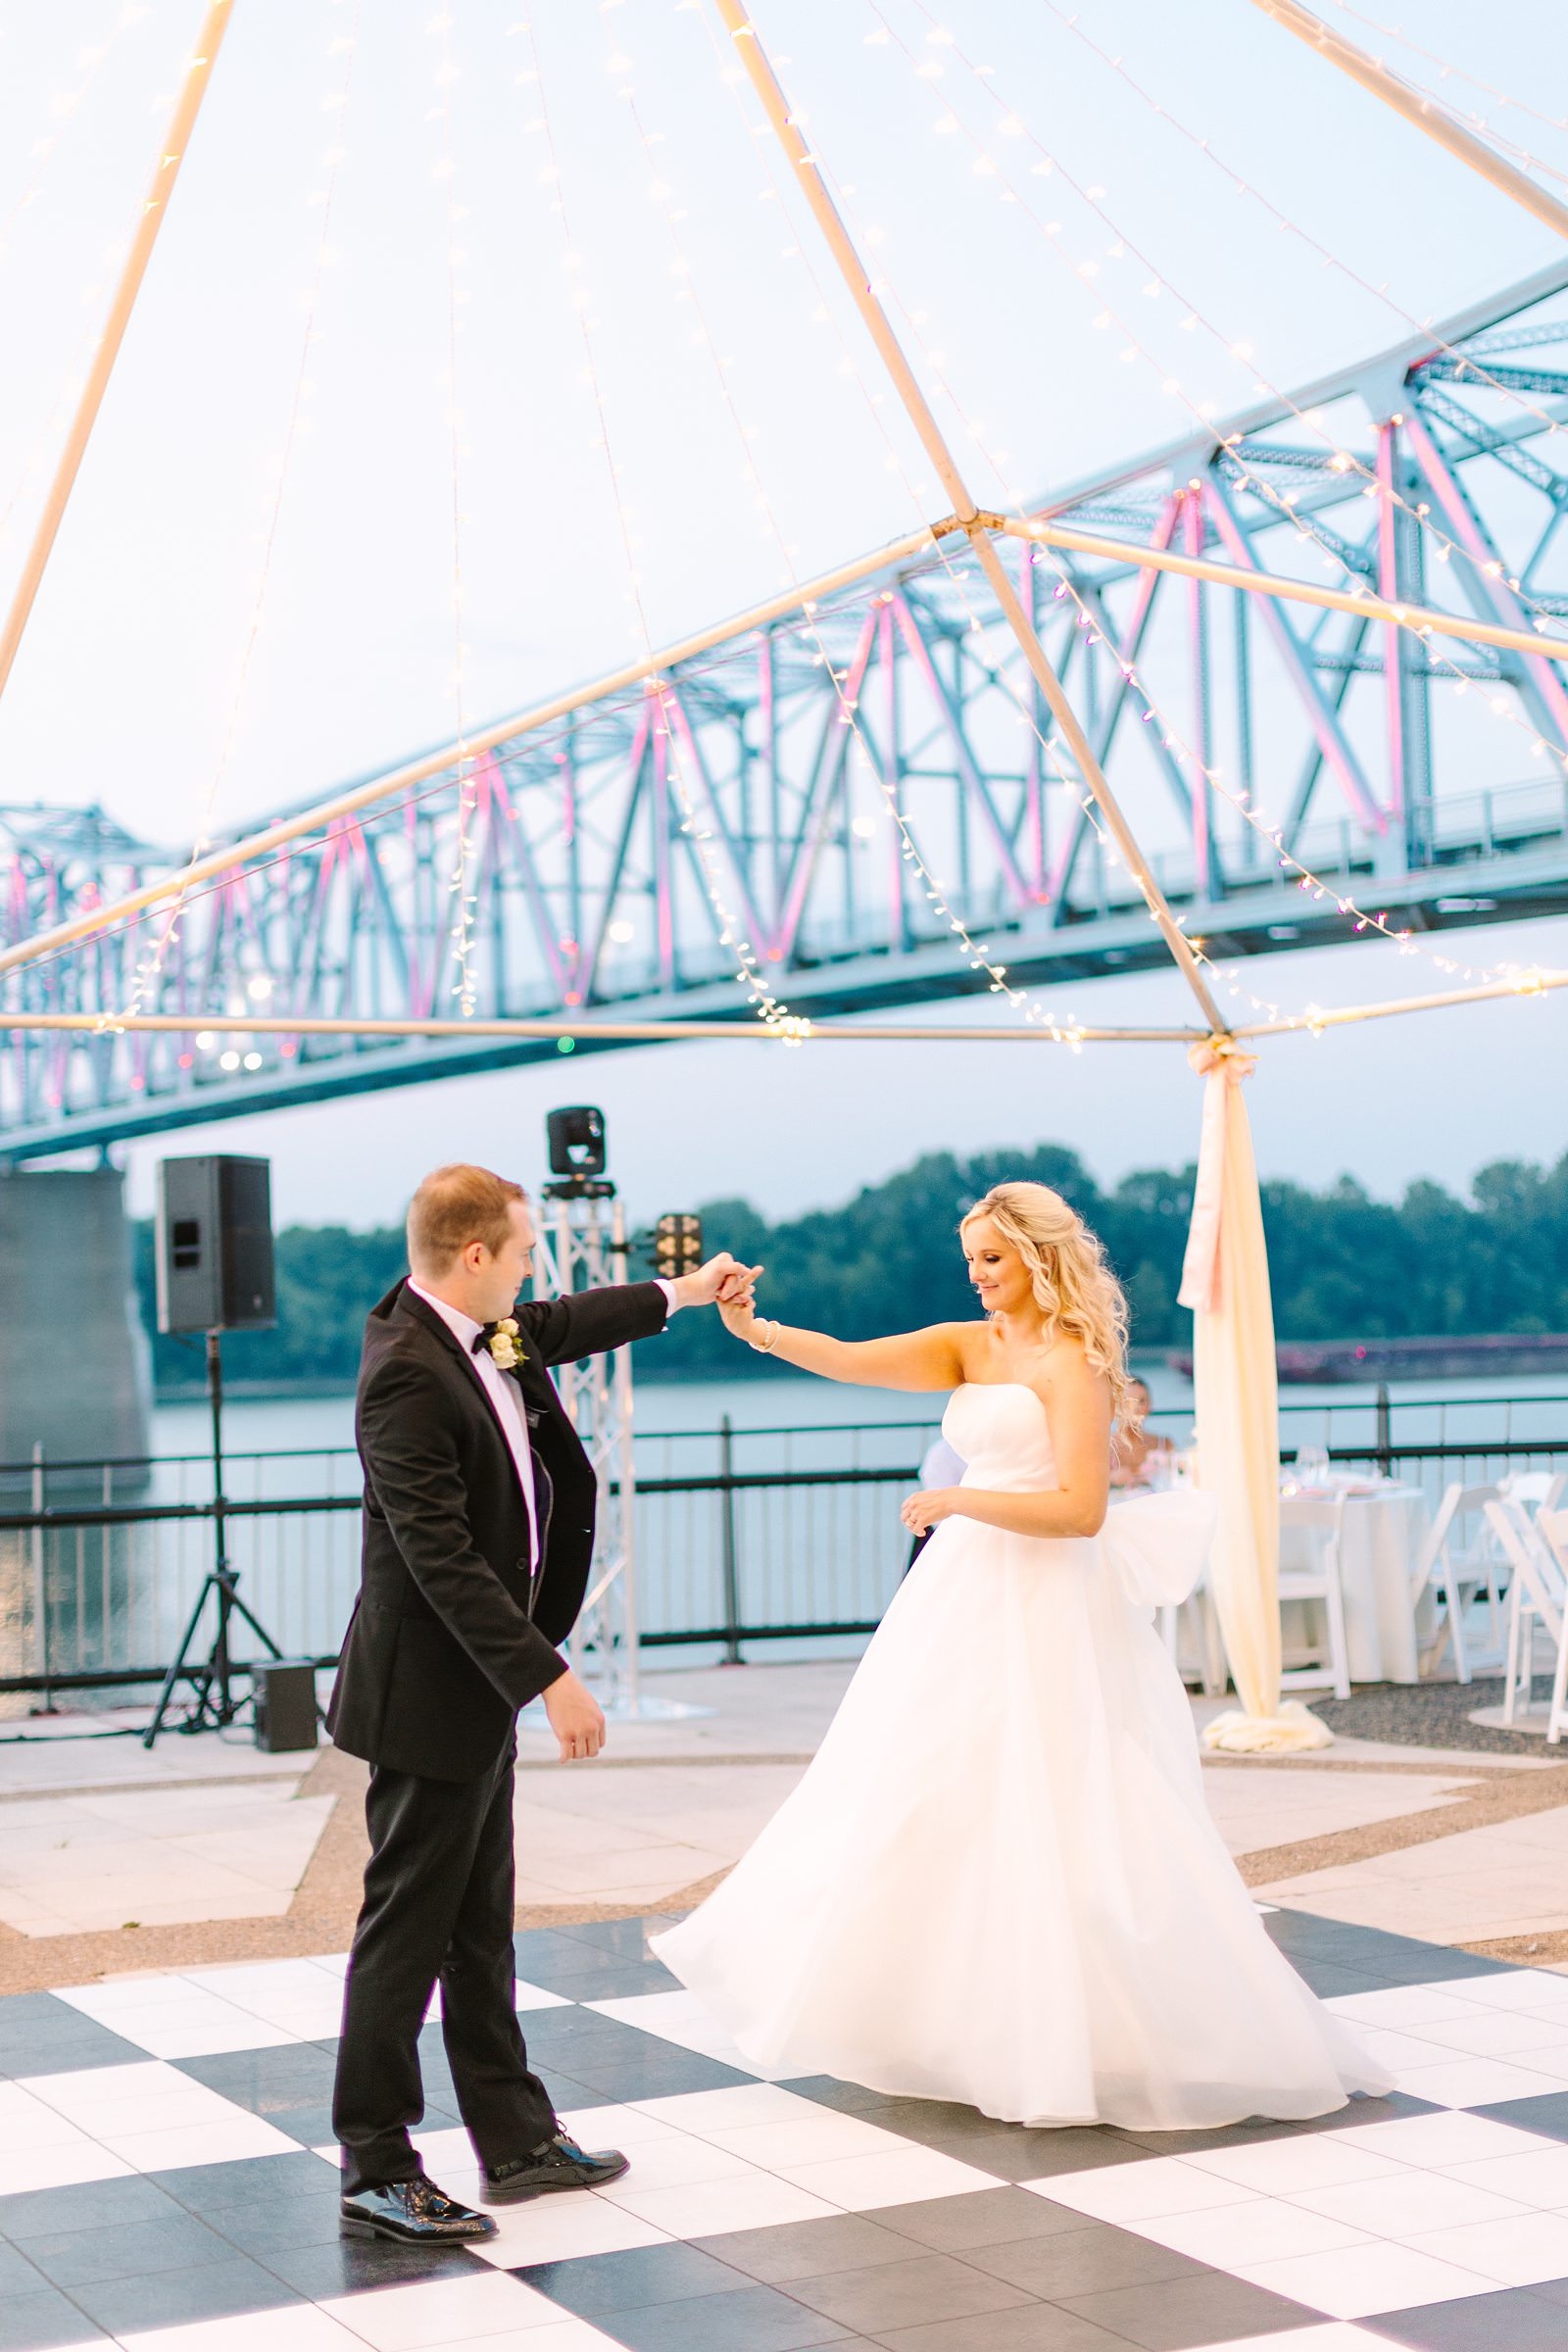 A Downtown Owensboro Wedding at River Park Center | Kaitlin & Justin151.jpg